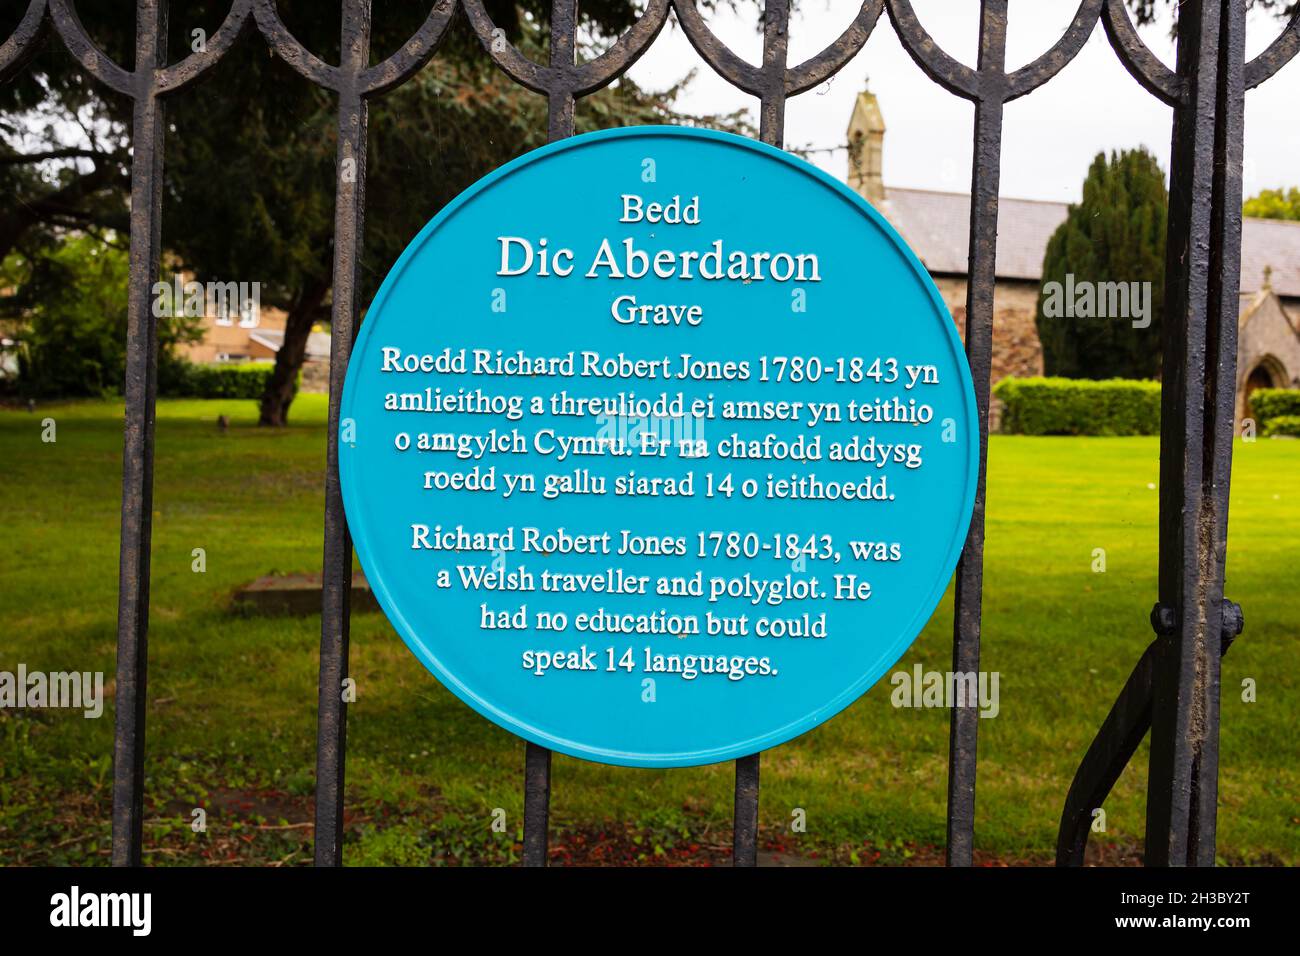 Blaue Plakette auf dem Geländer der Pfarrkirche St. Asaph, St. Asaph, Denbighshire, Wales. Richard Robert Jones 1780 - 1843 hier begraben. Stockfoto